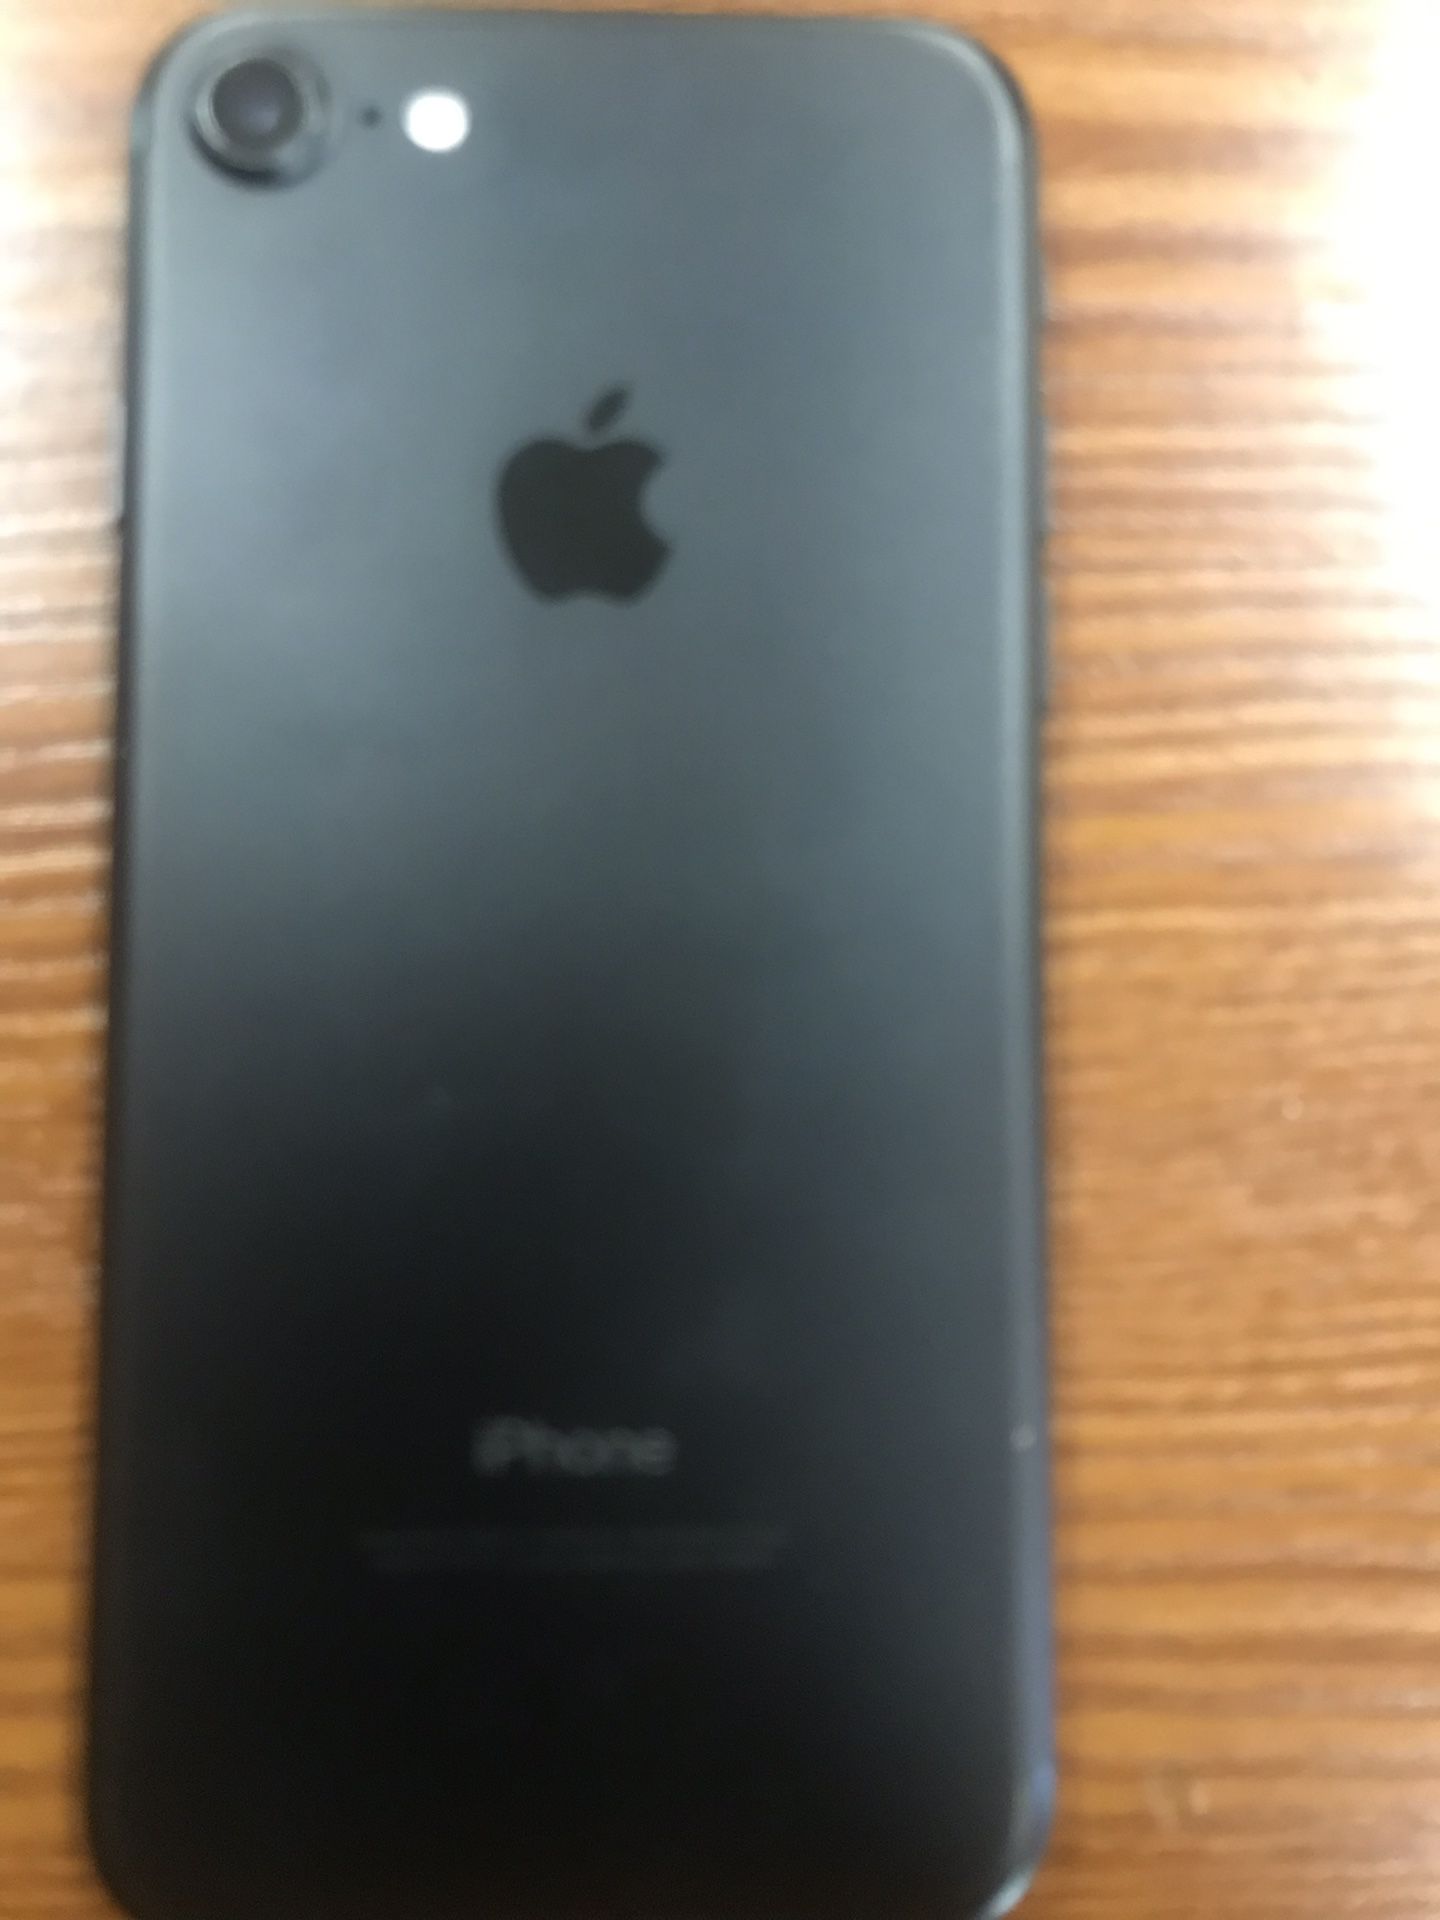 Apple iPhone 7 32gb black factory unlocked like new condition